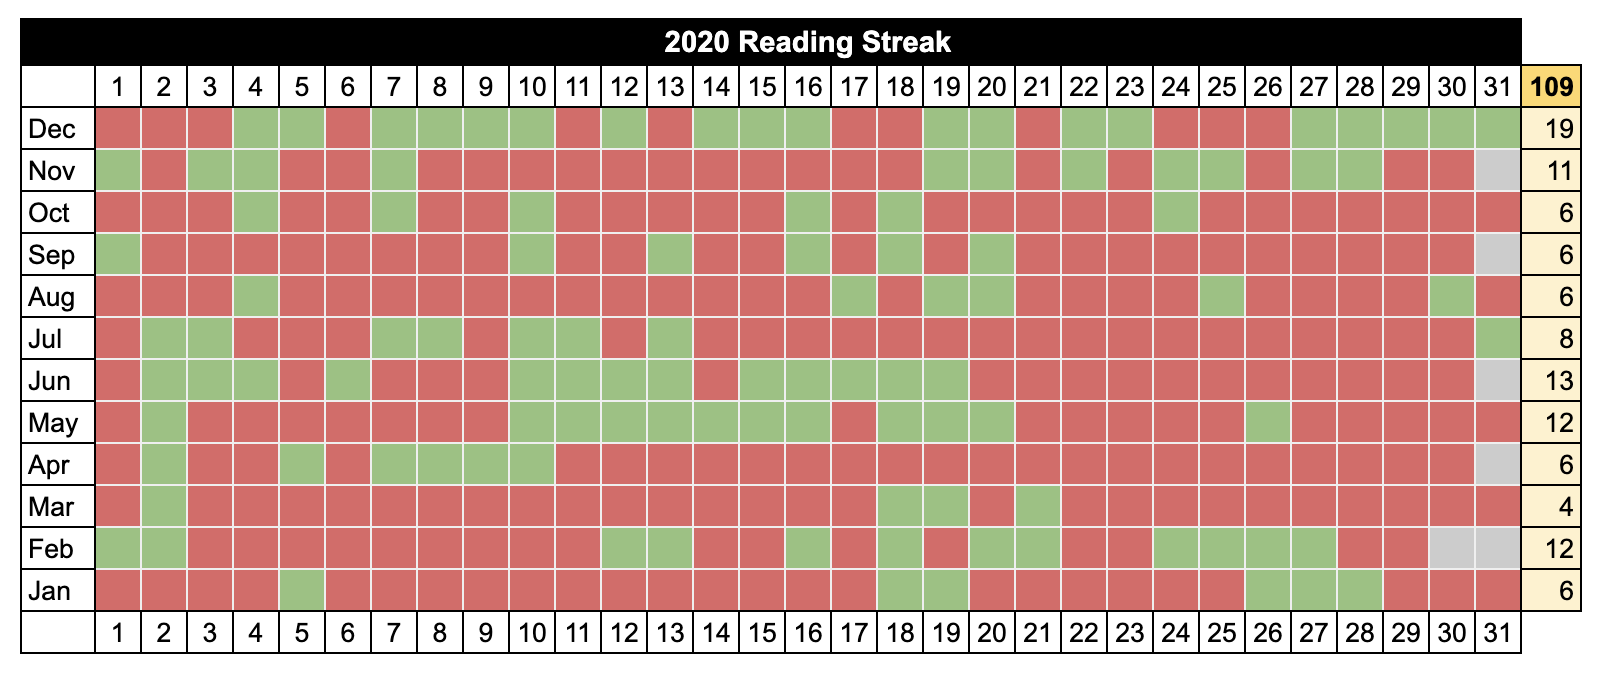 Reading Streak 2020